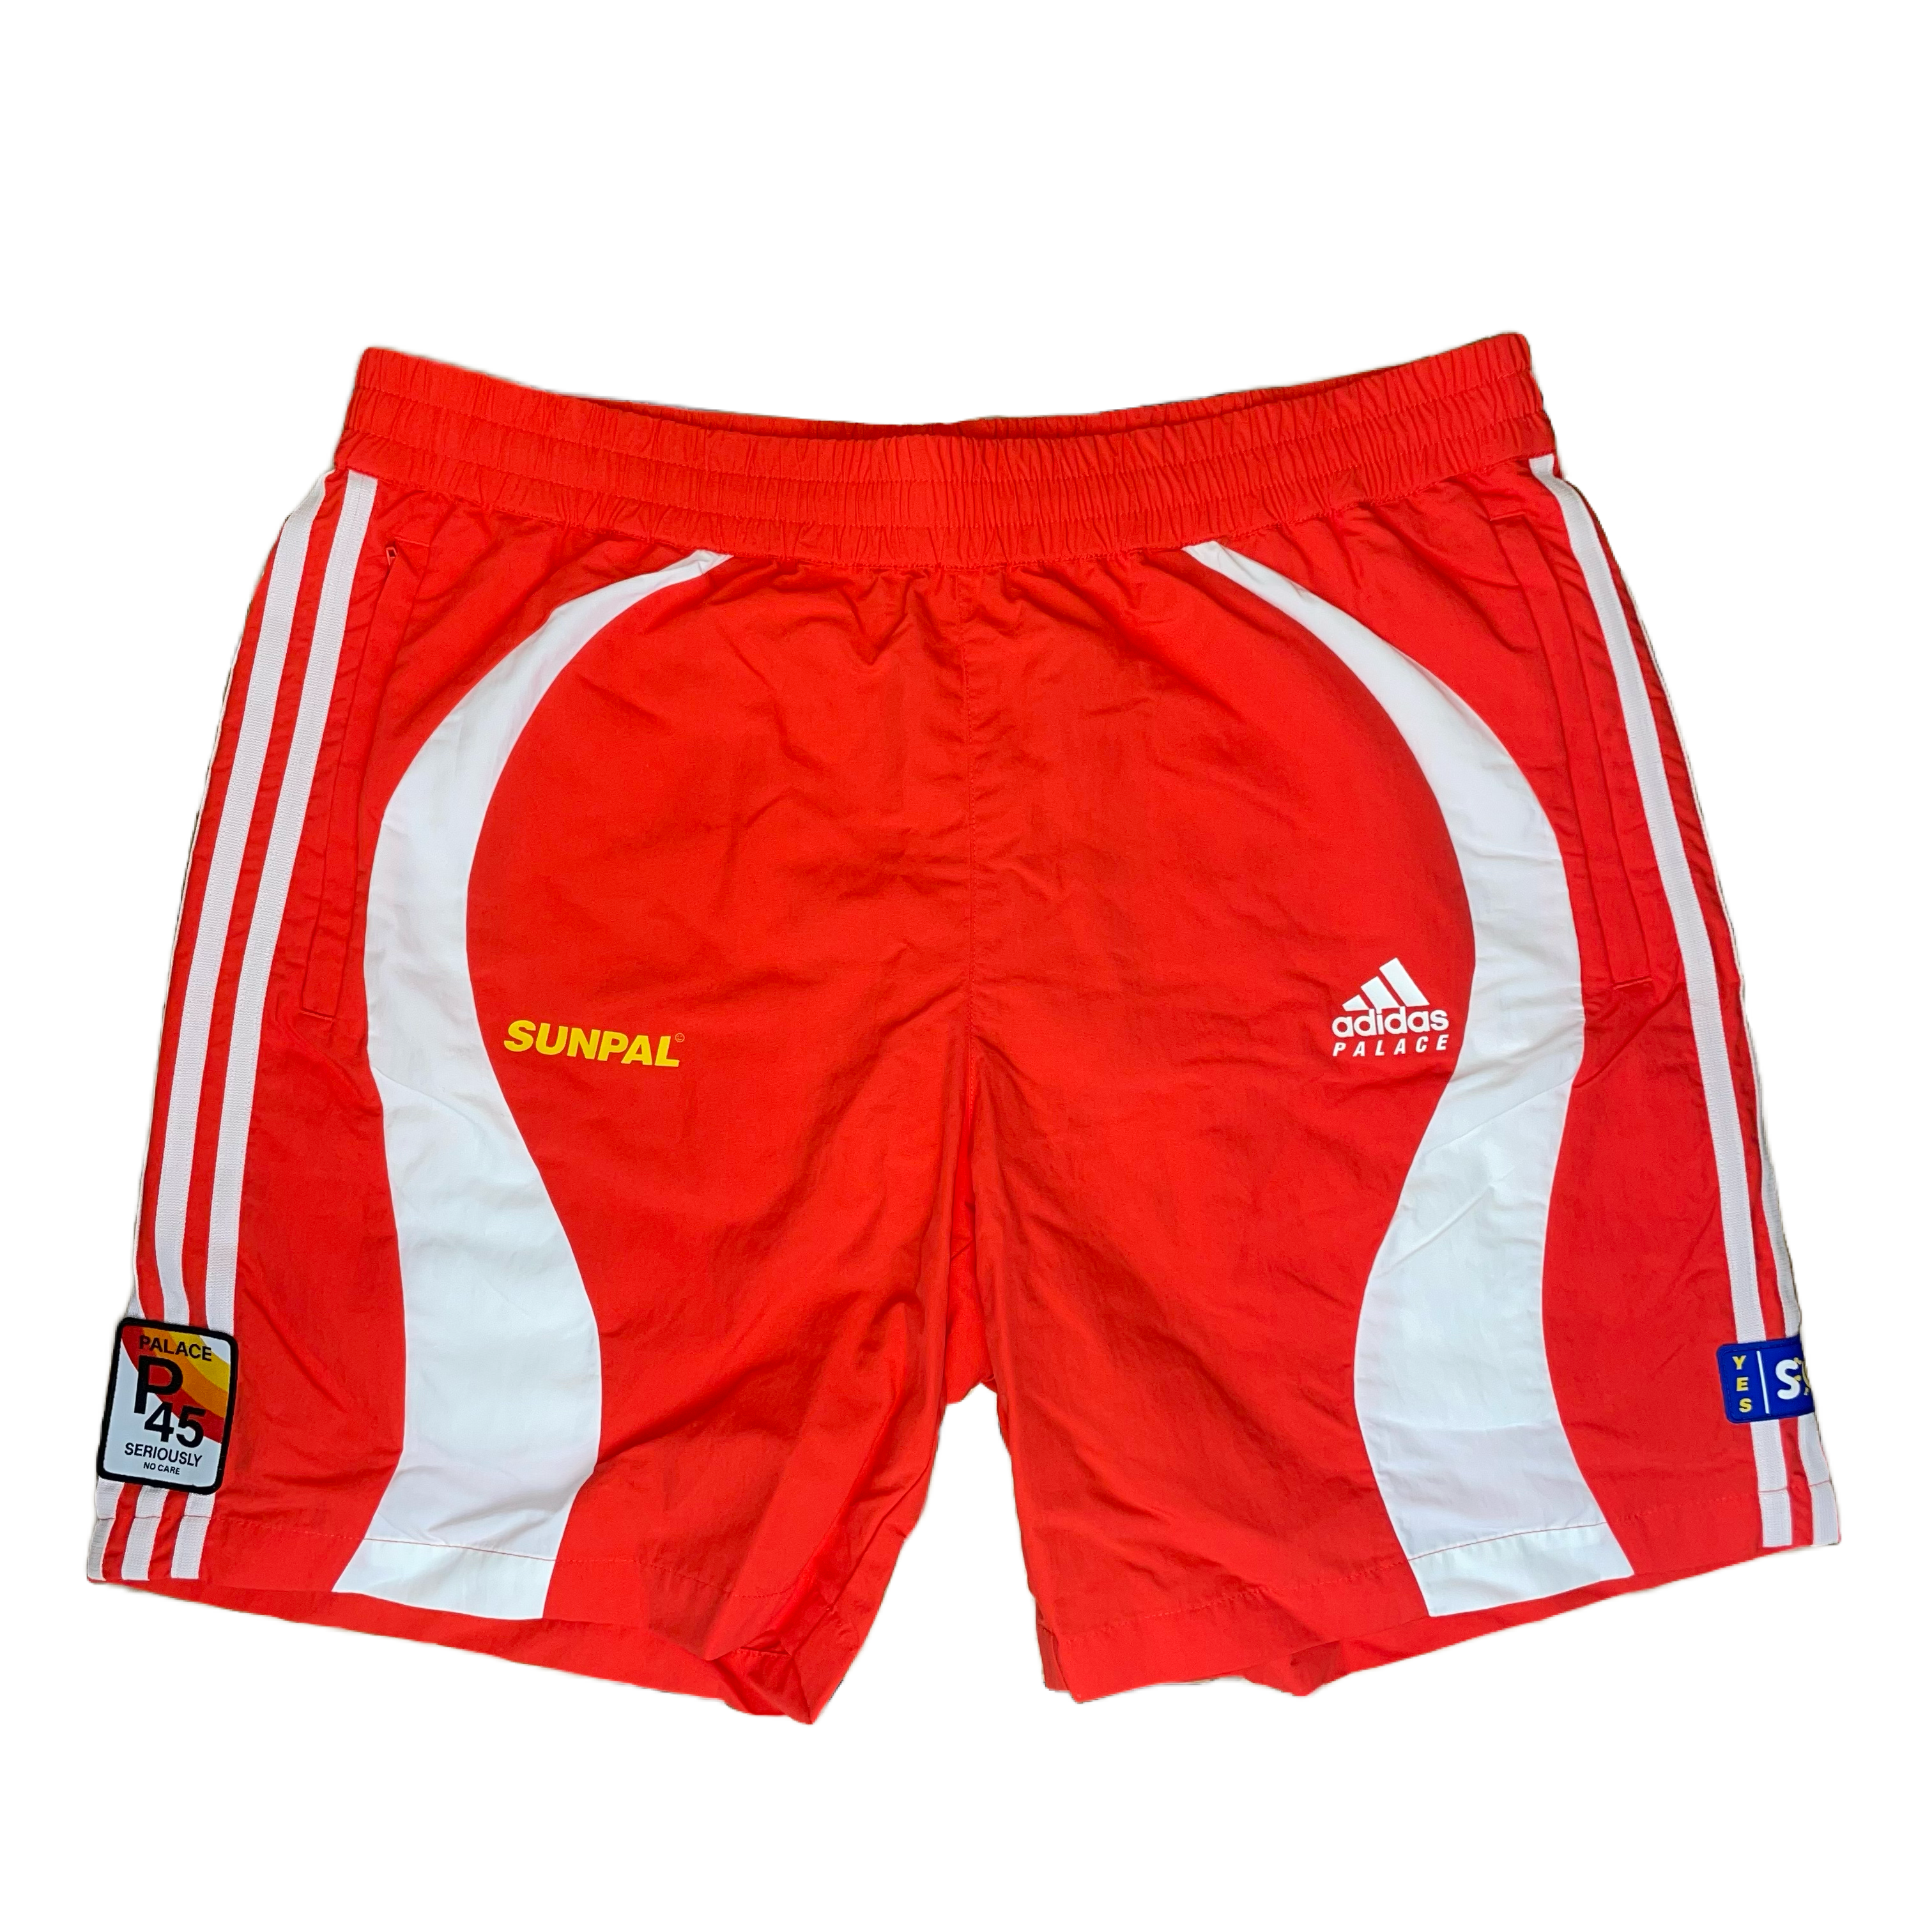 Adidas Palace Sunpal Shorts | M＆M Select shop powered by BASE